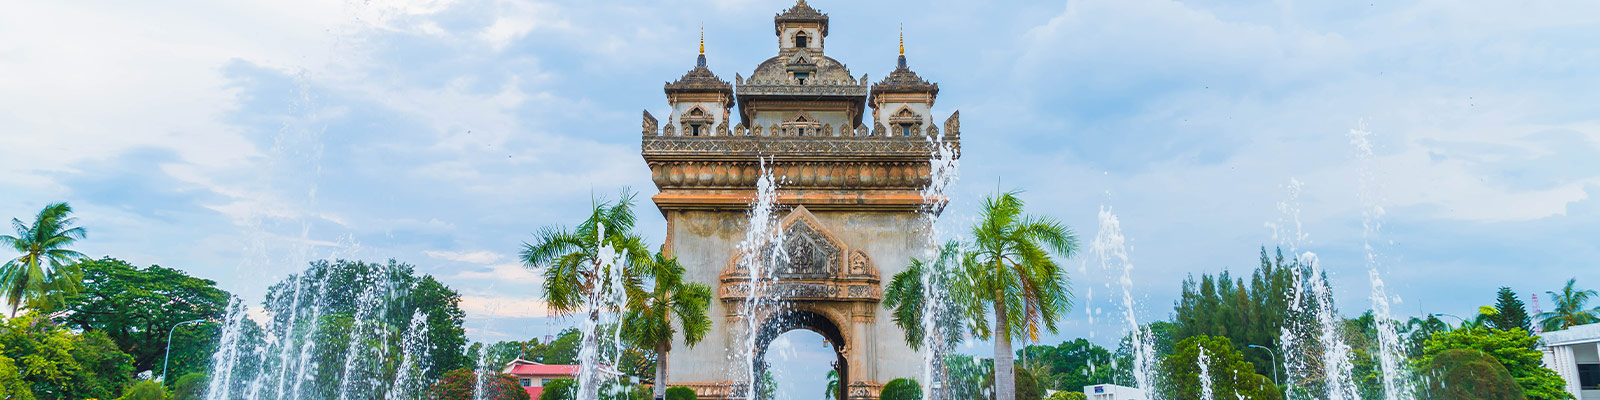 Vientián, Laos